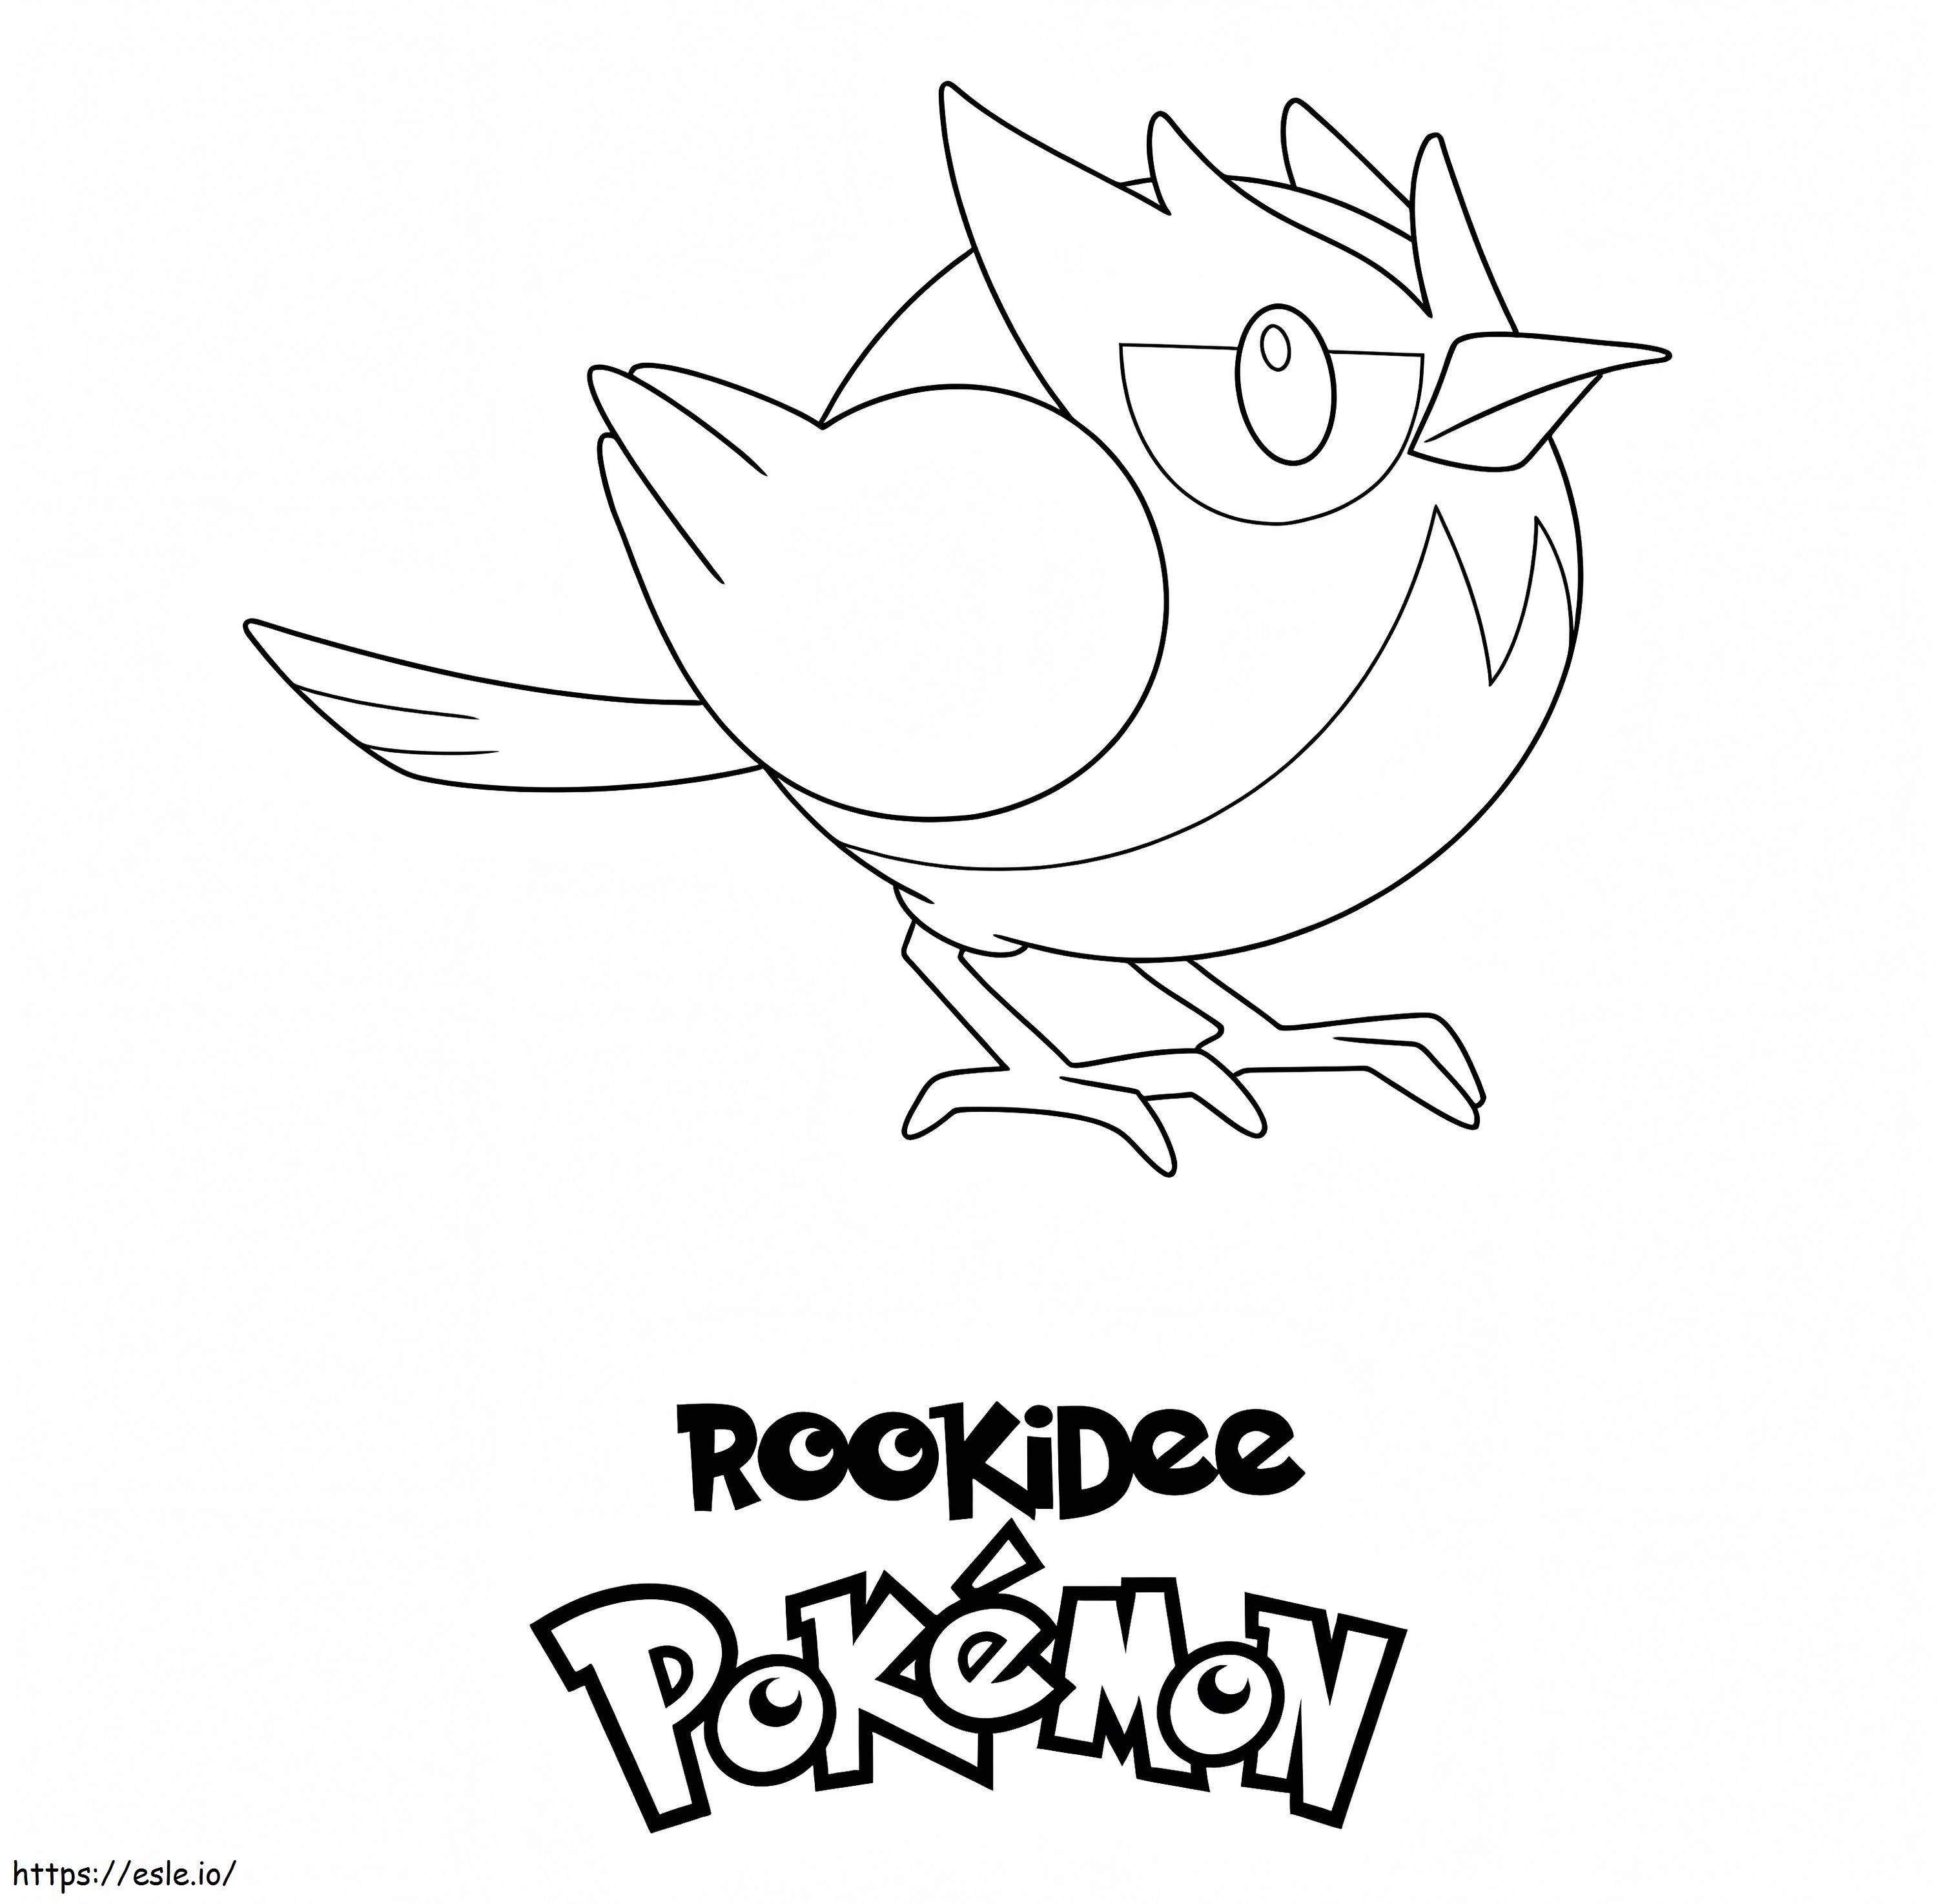 Rookidee Pokemon coloring page